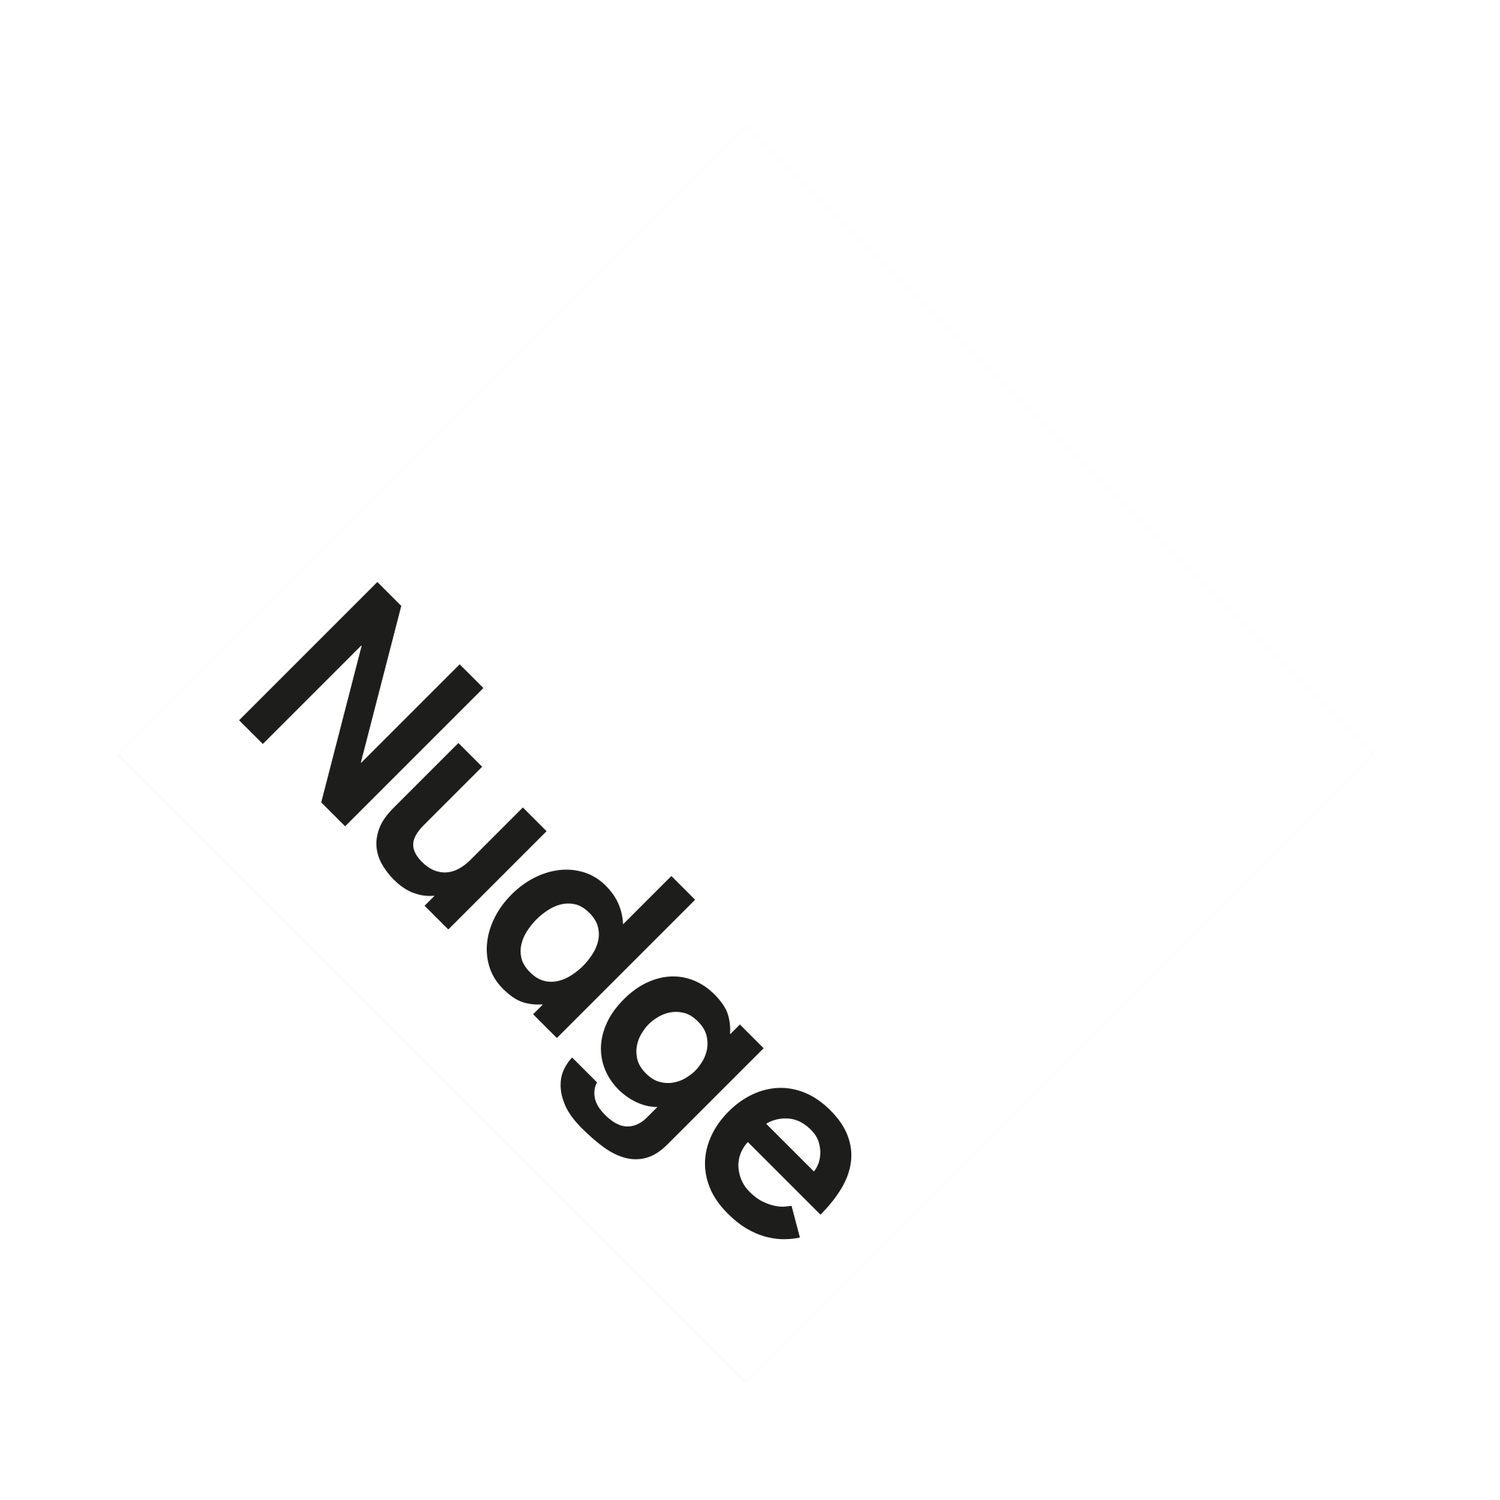 Nudge Community Builders